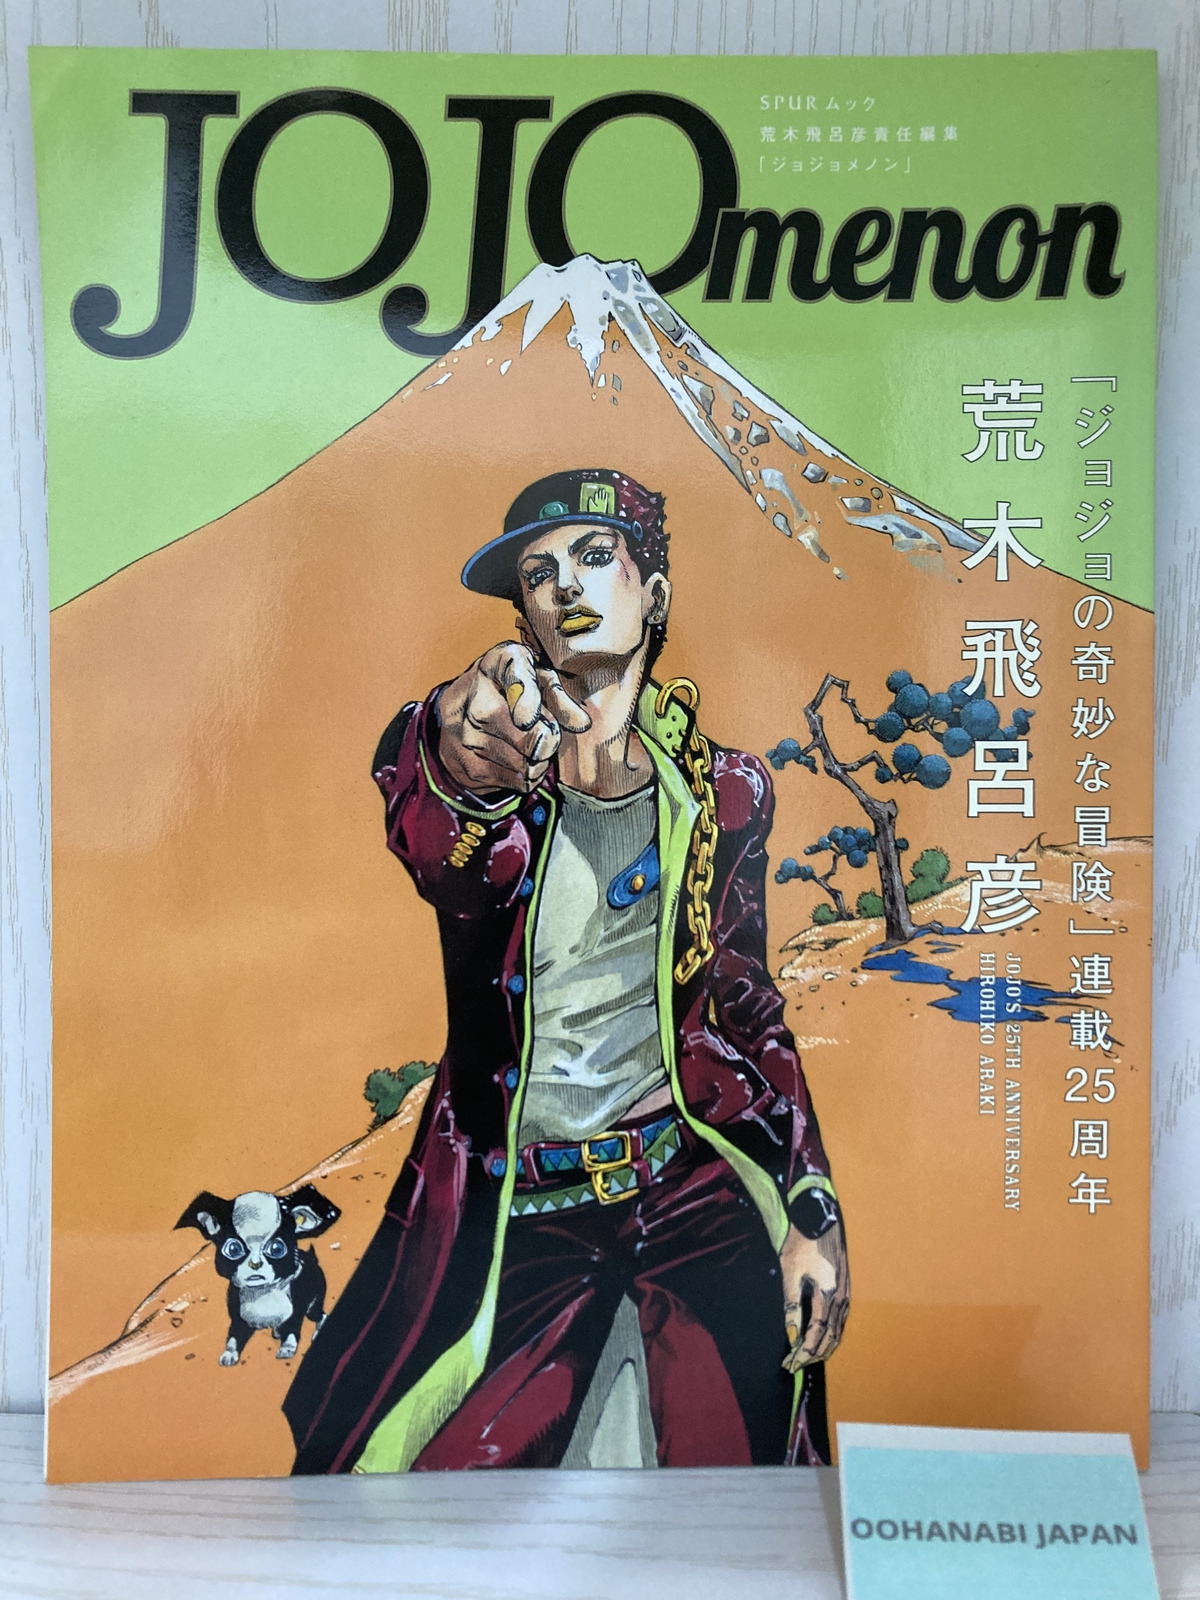 JOJOmenon JoJo's Bizarre Adventure 25th Anniversary Book Hirohiko Araki Art 